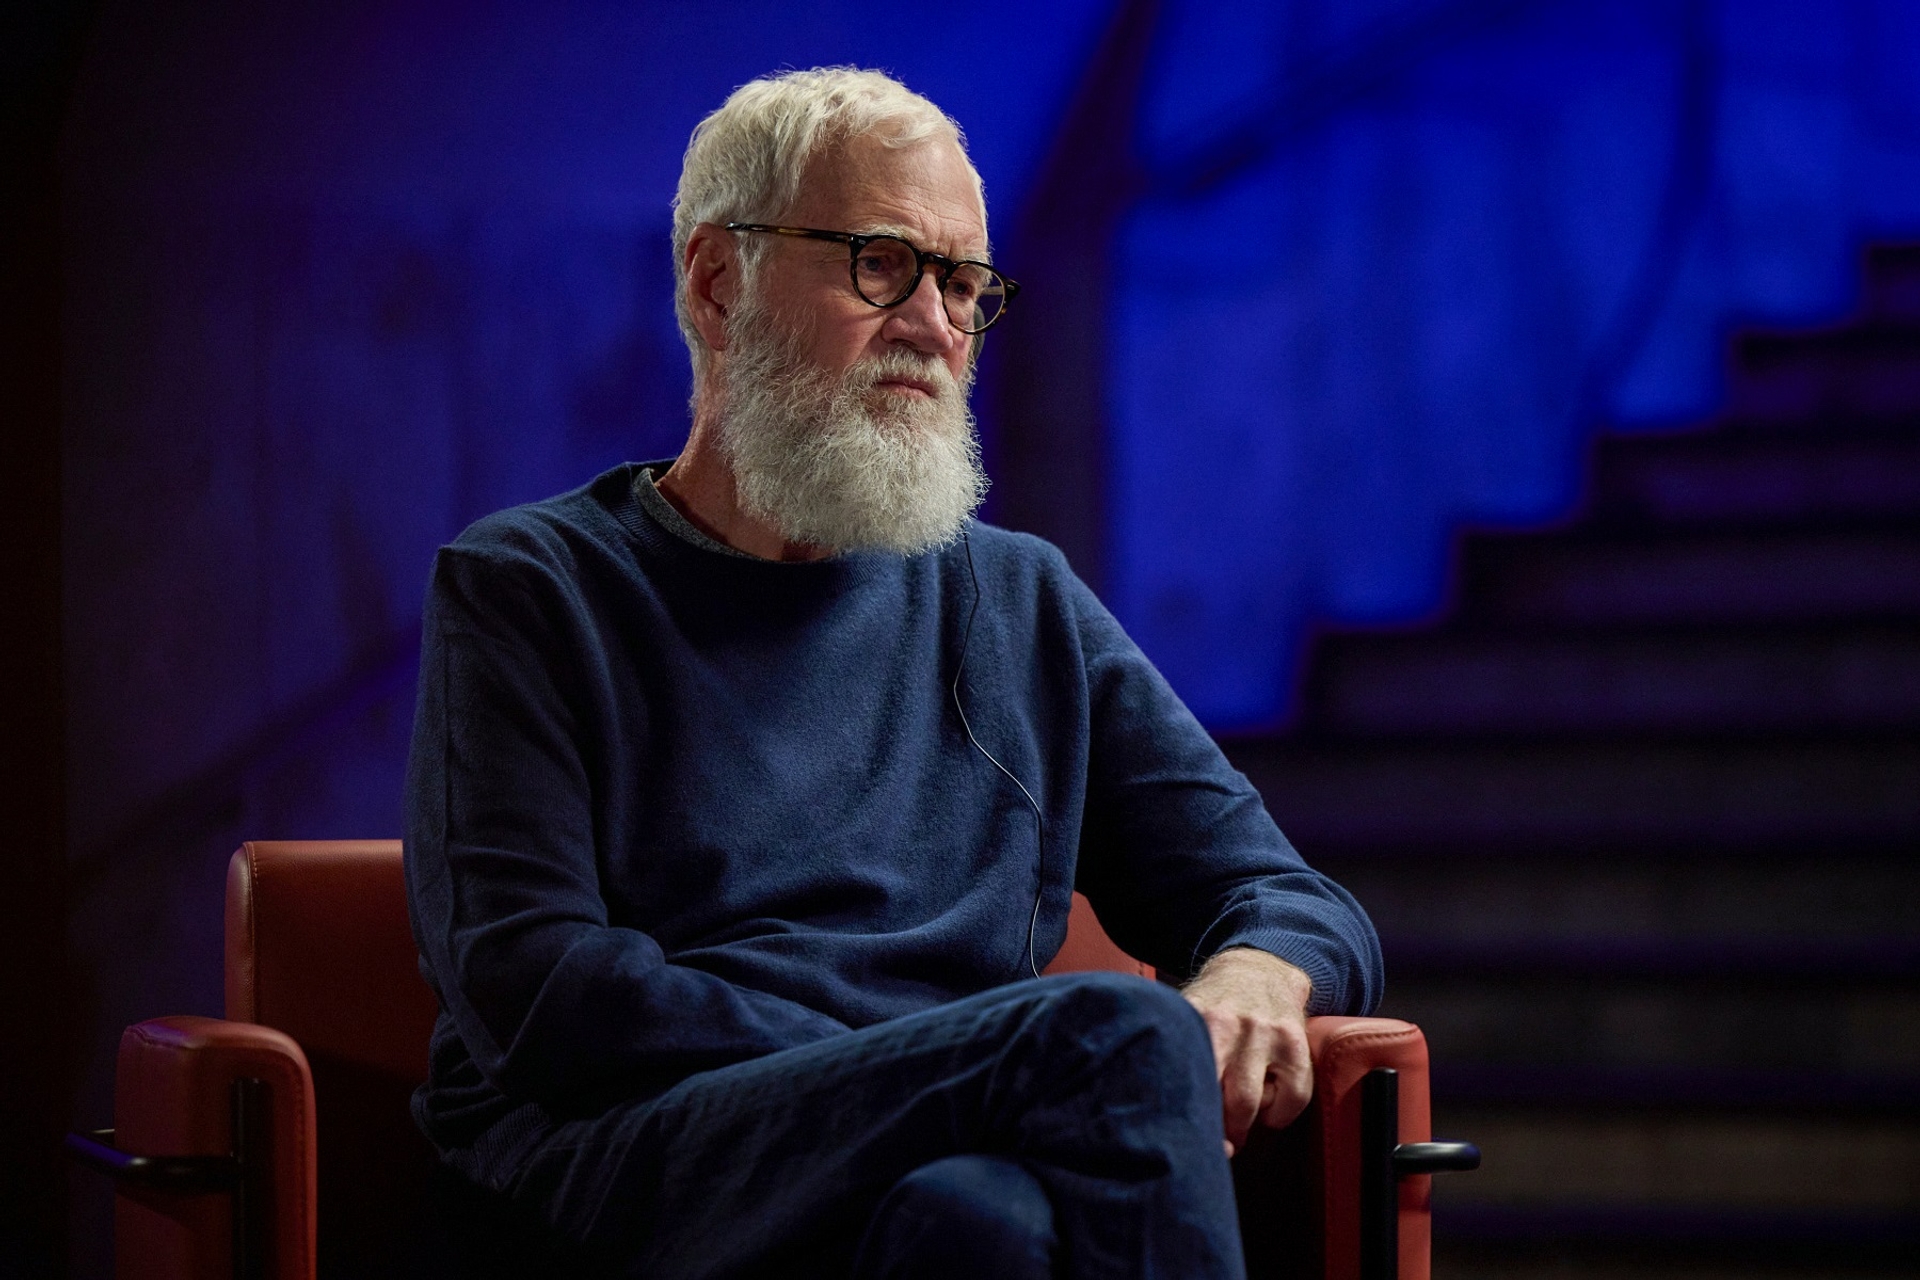 My Next Guest with David Letterman: Volodymyr Zelensky